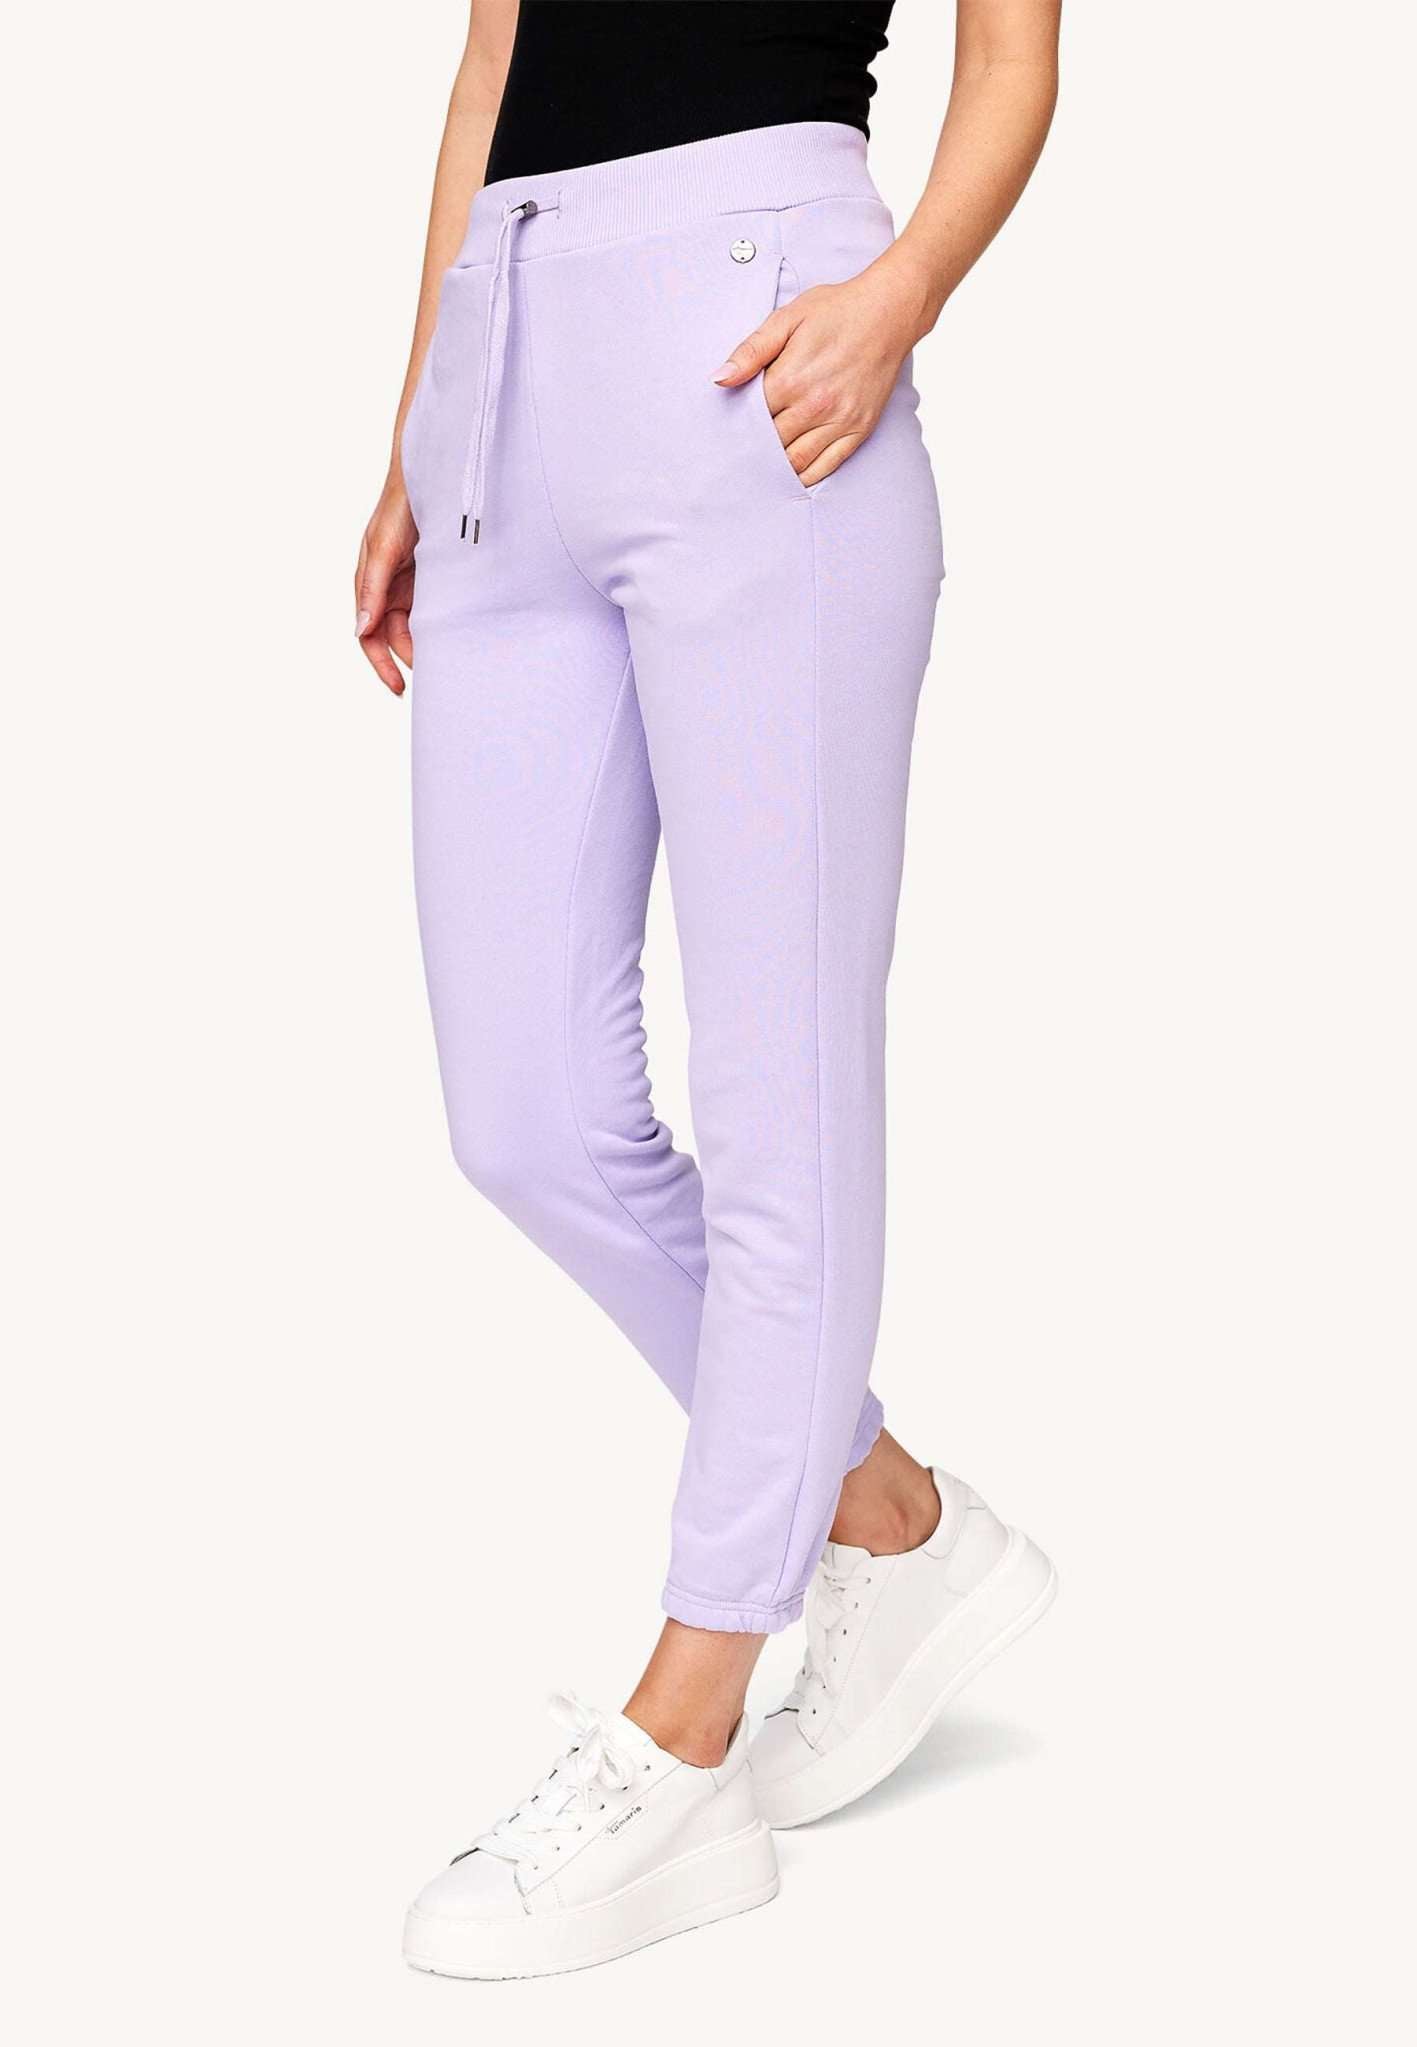 Avellino Jogger Pants in Lavender Hosen Tamaris   